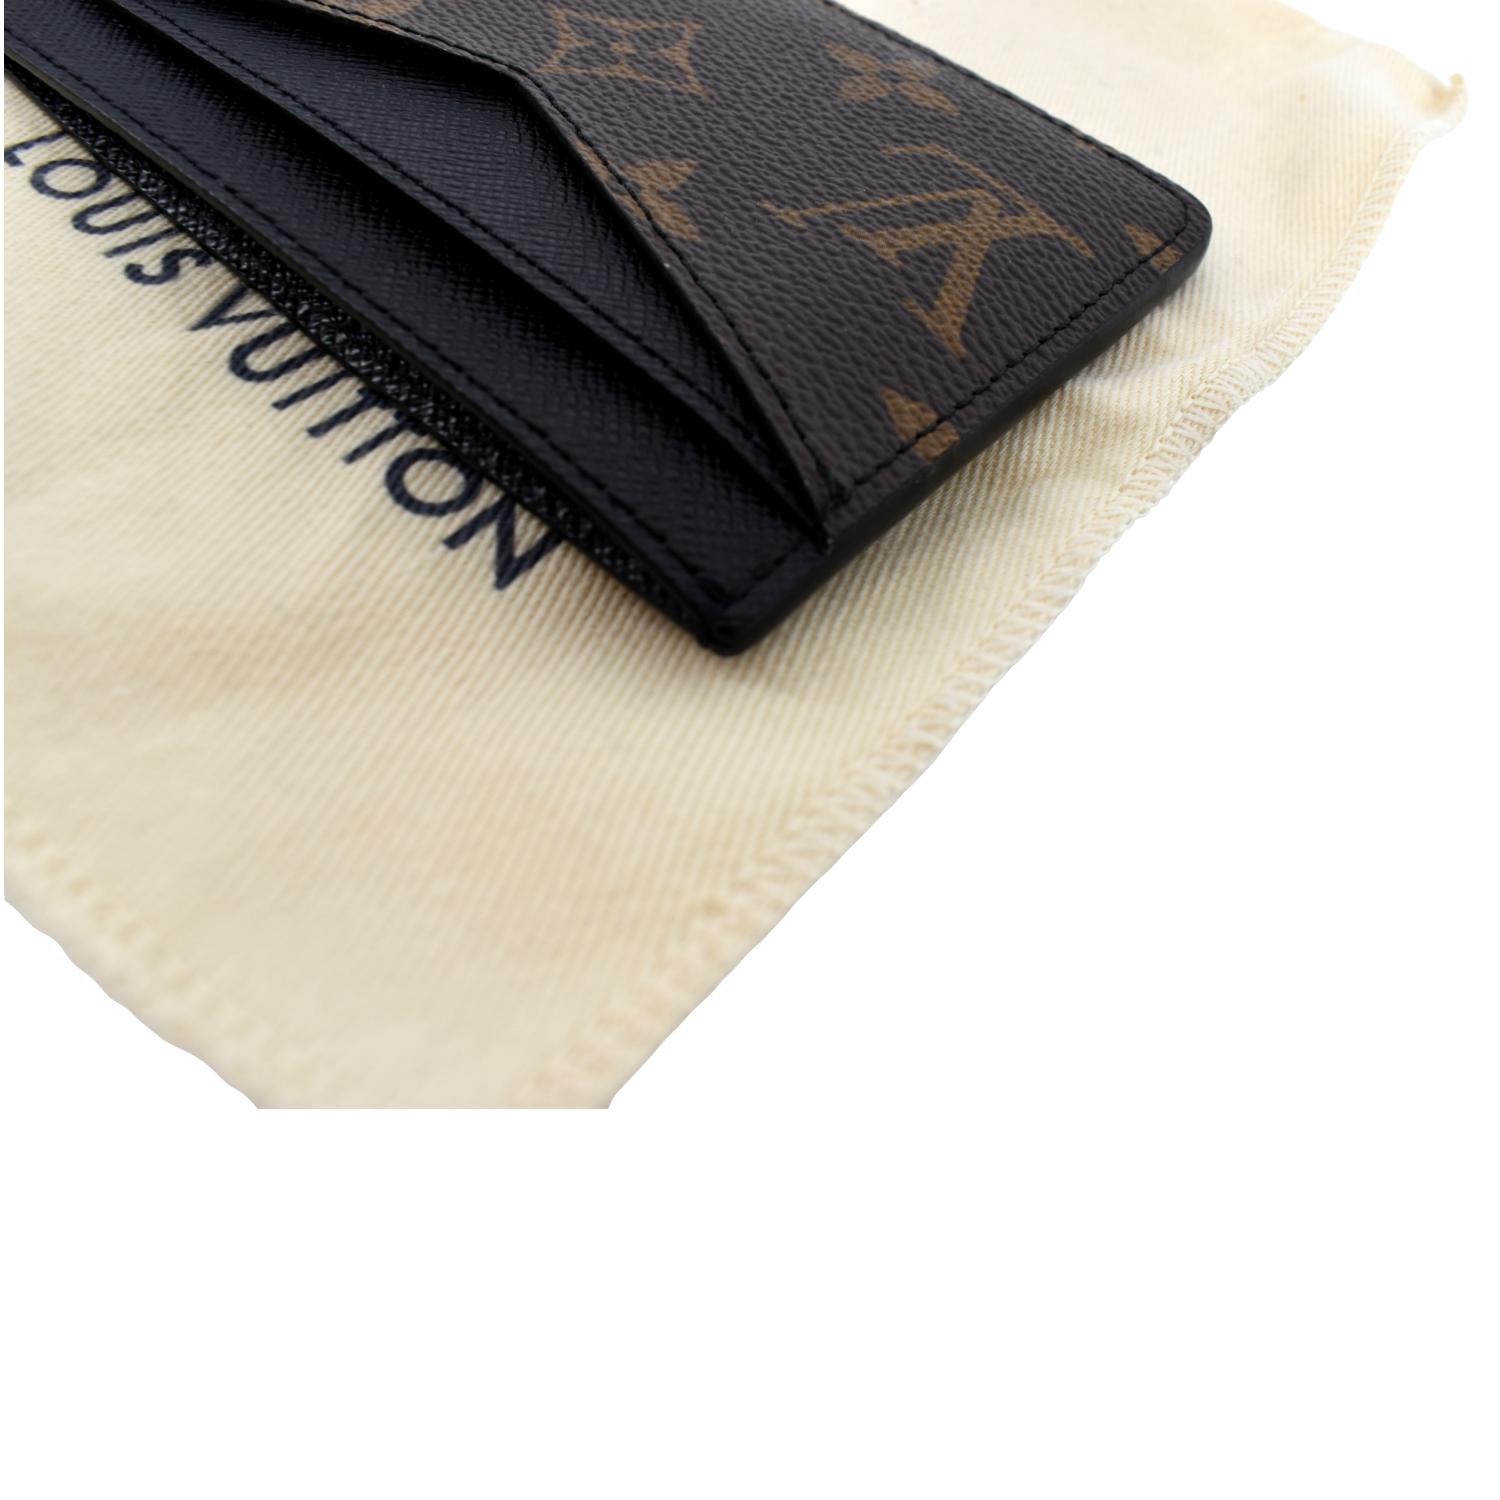 Louis Vuitton Coin Card Holder Monogram Brown